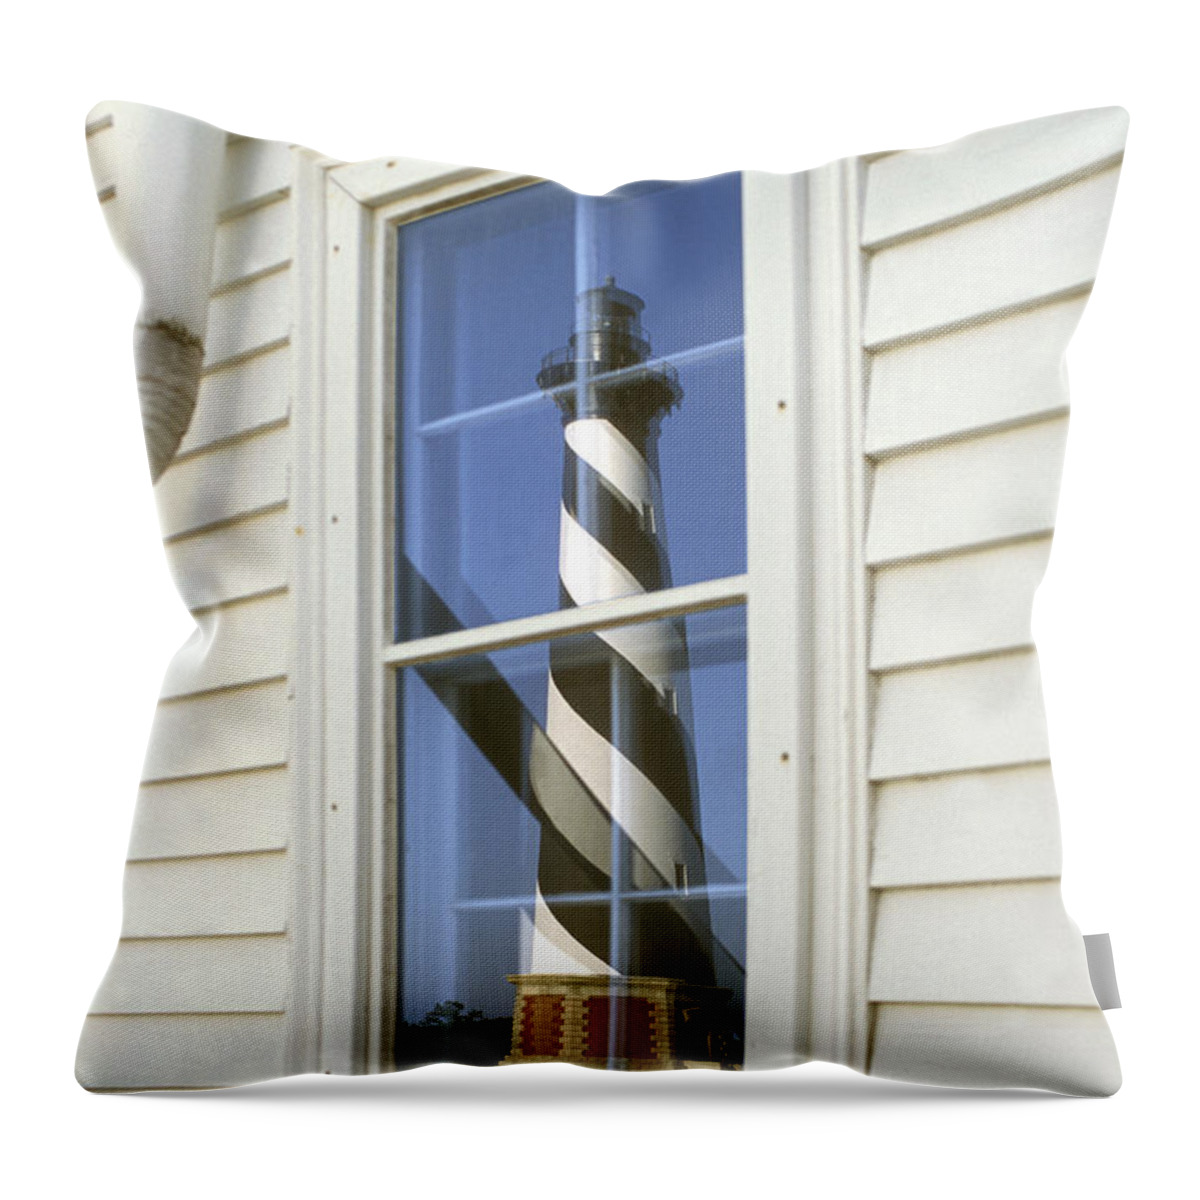 Cape Hatteras Lighthouse Throw Pillow featuring the photograph Cape Hatteras Lighthouse 2 by Mike McGlothlen